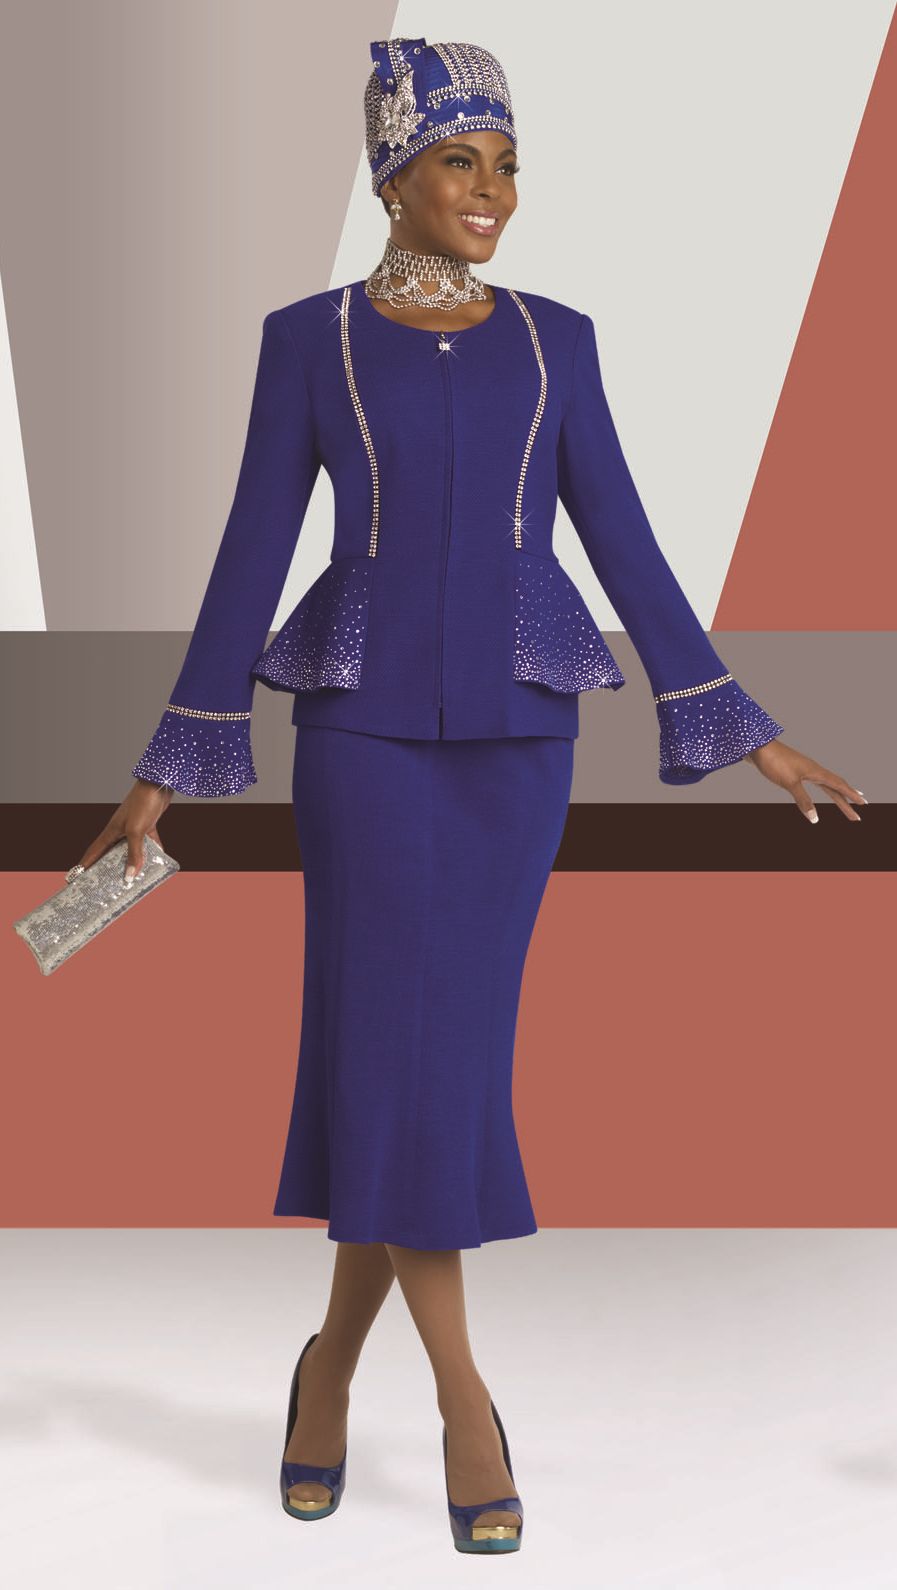 Donna Vinci 13043 Knit Church Suit: French Novelty